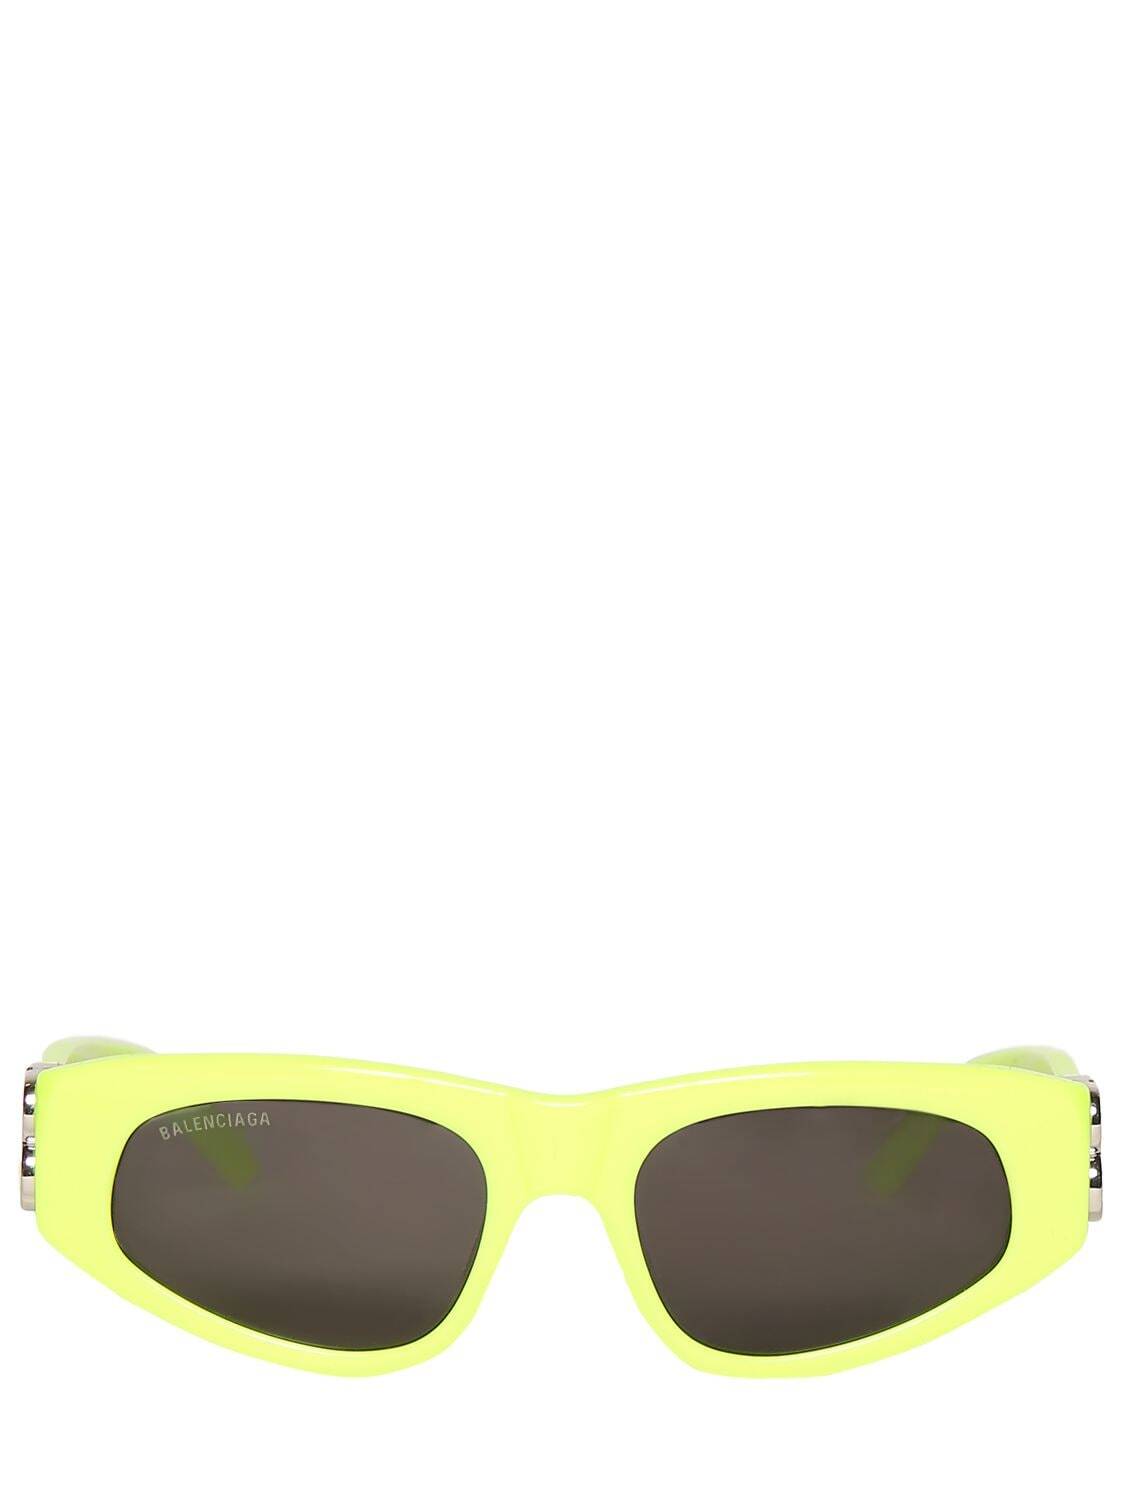 BALENCIAGA 0095s Dynasty D-frame Acetate Sunglasses in yellow